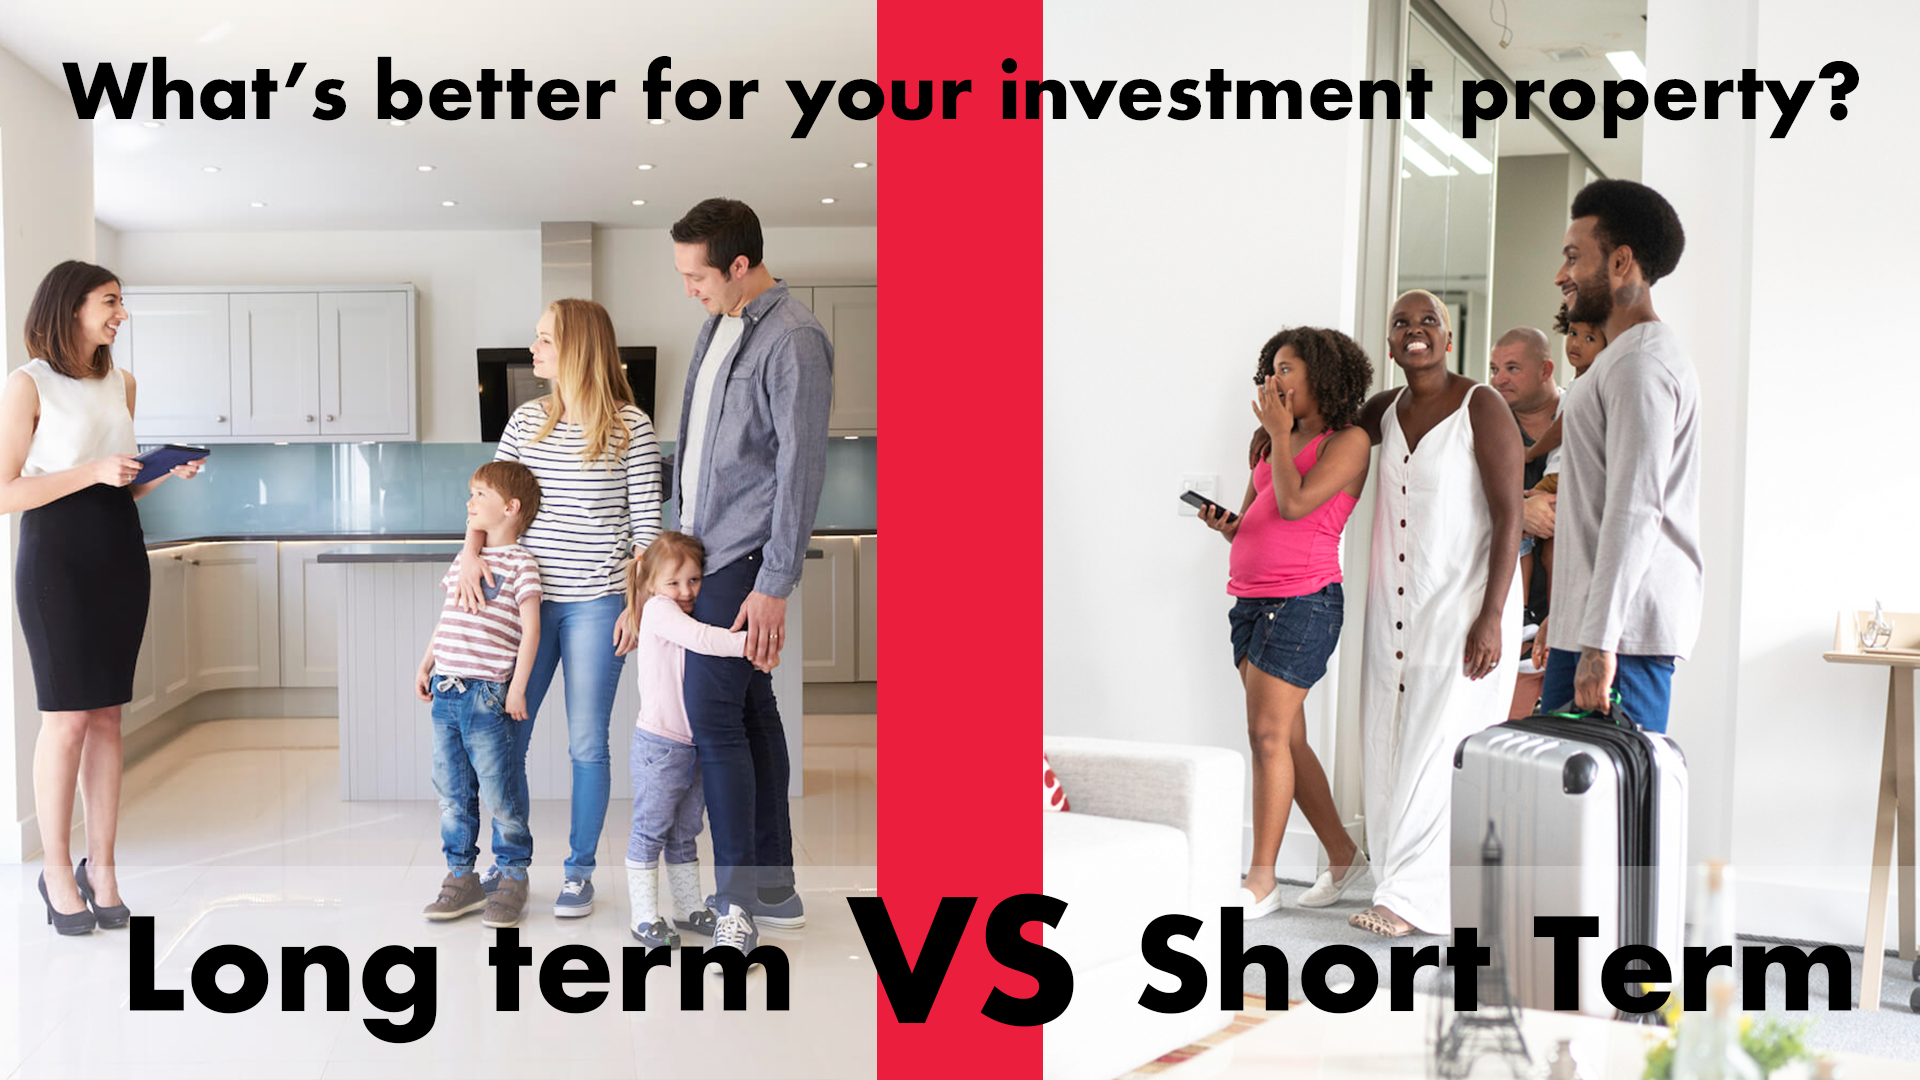 Short term rental vs long term rental